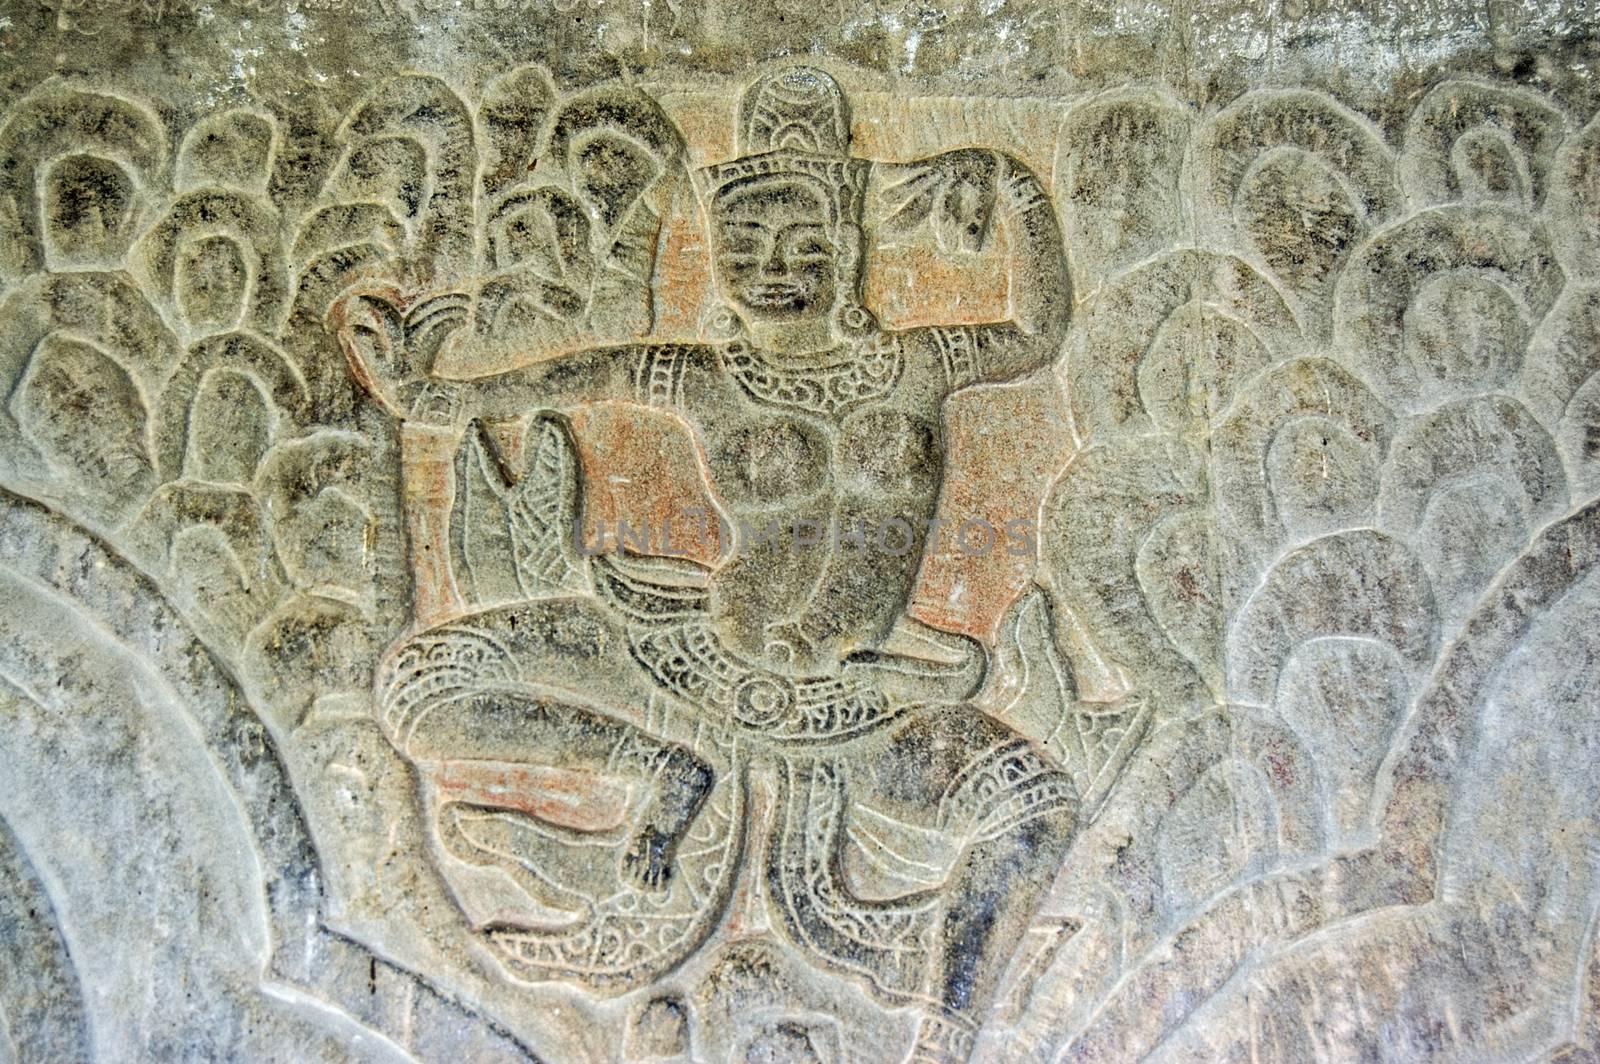 Dancing Figure bas relief, Angkor Wat Temple by BasPhoto